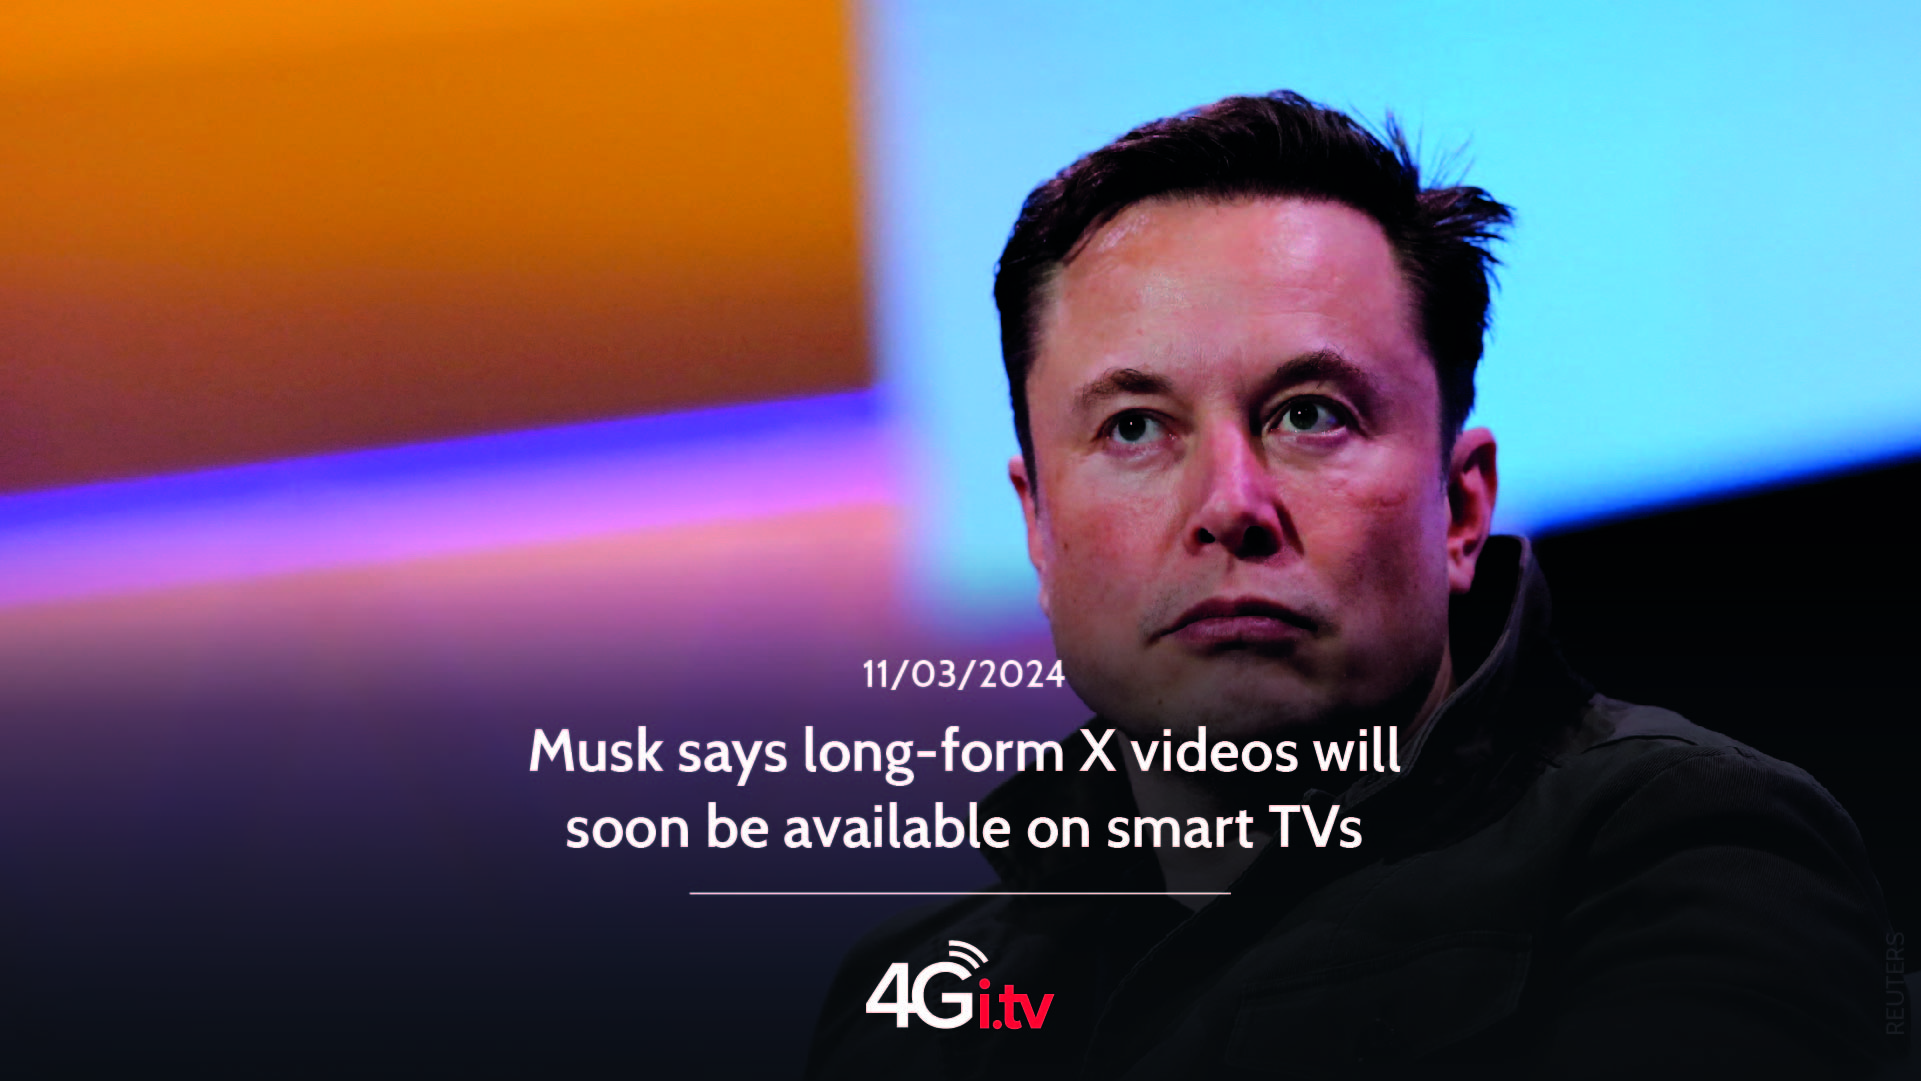 Lesen Sie mehr über den Artikel Musk says long-form X videos will soon be available on smart TVs